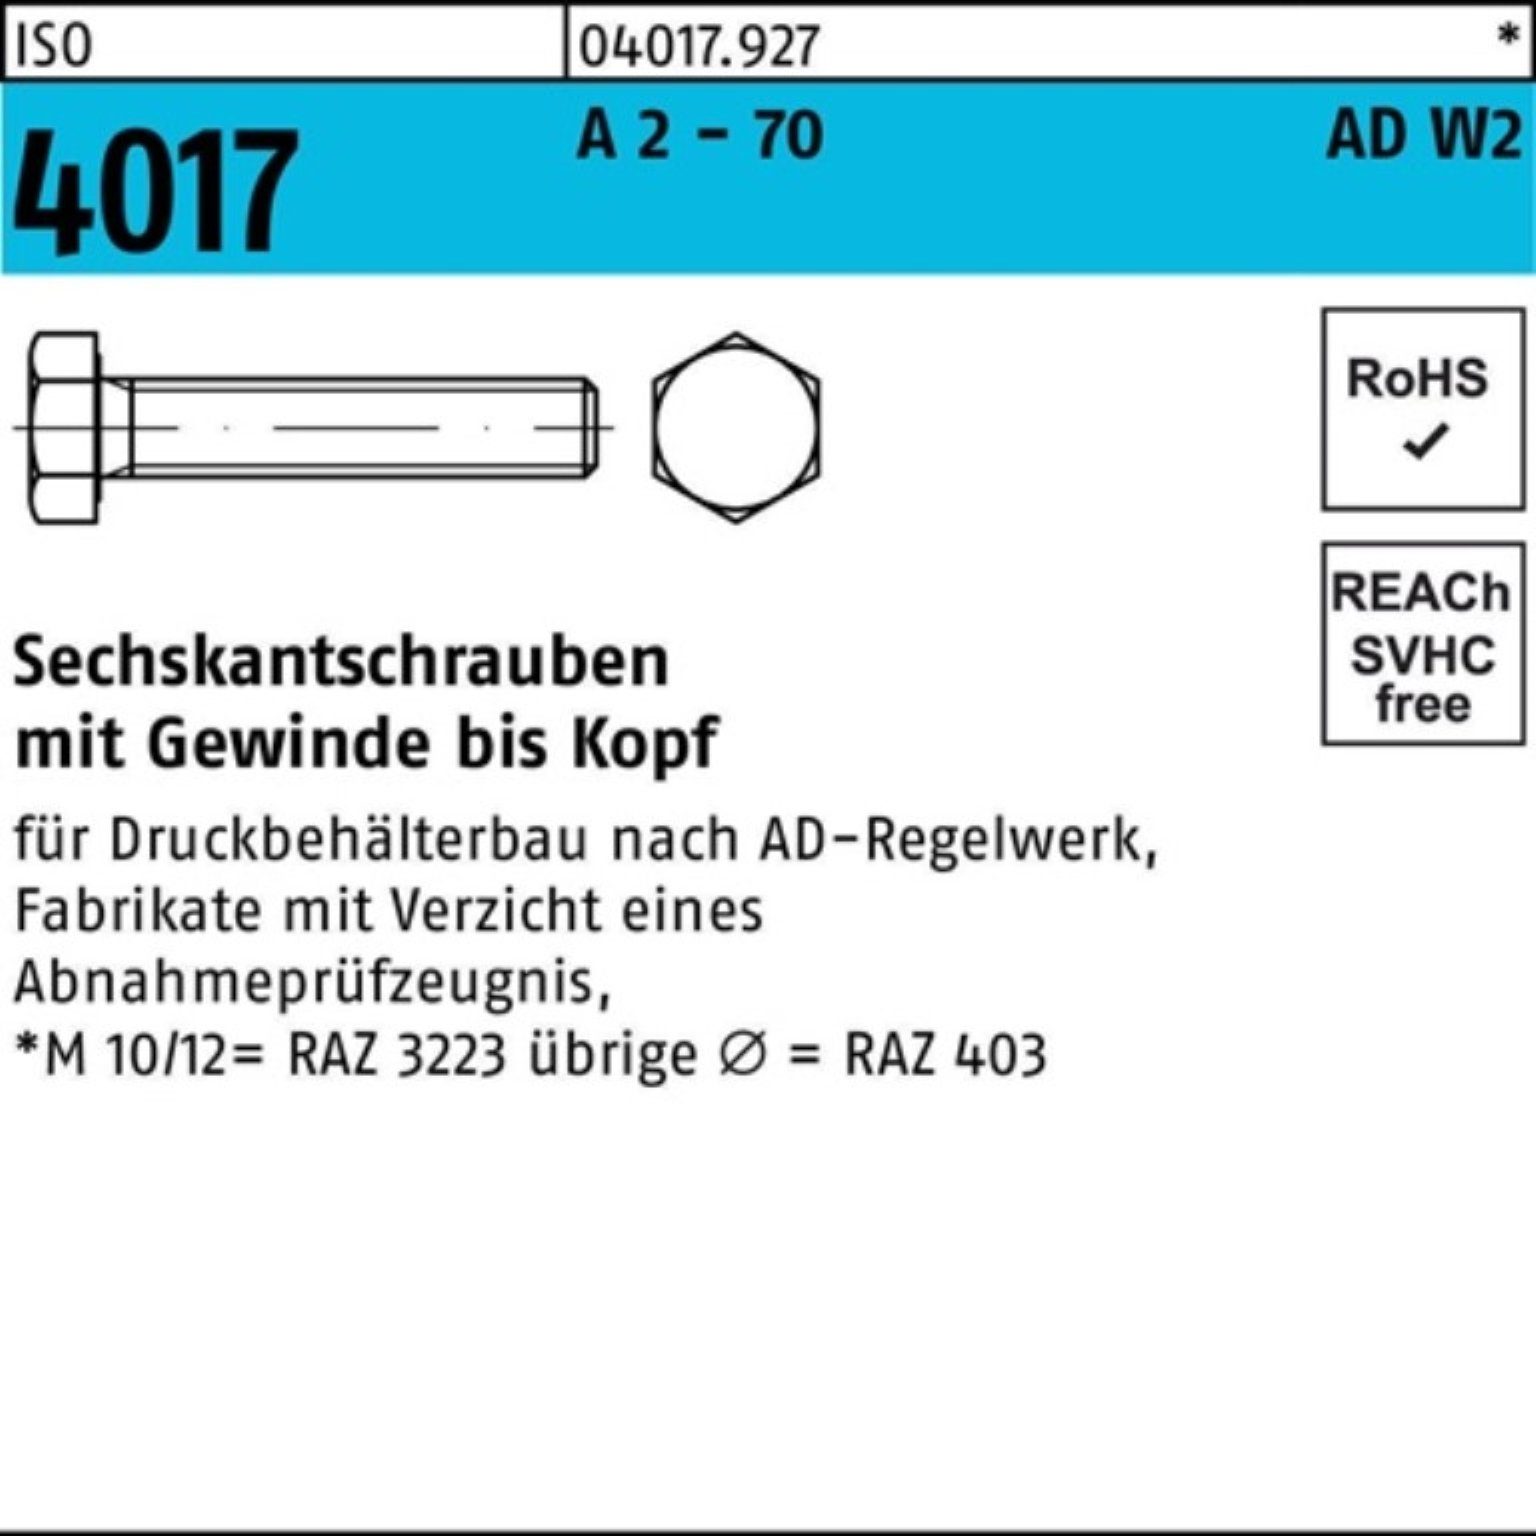 Pack AD-W2 Sechskantschraube 25 70 4017 A 100er Bufab 2 35 Sechskantschraube M16x - VG St ISO